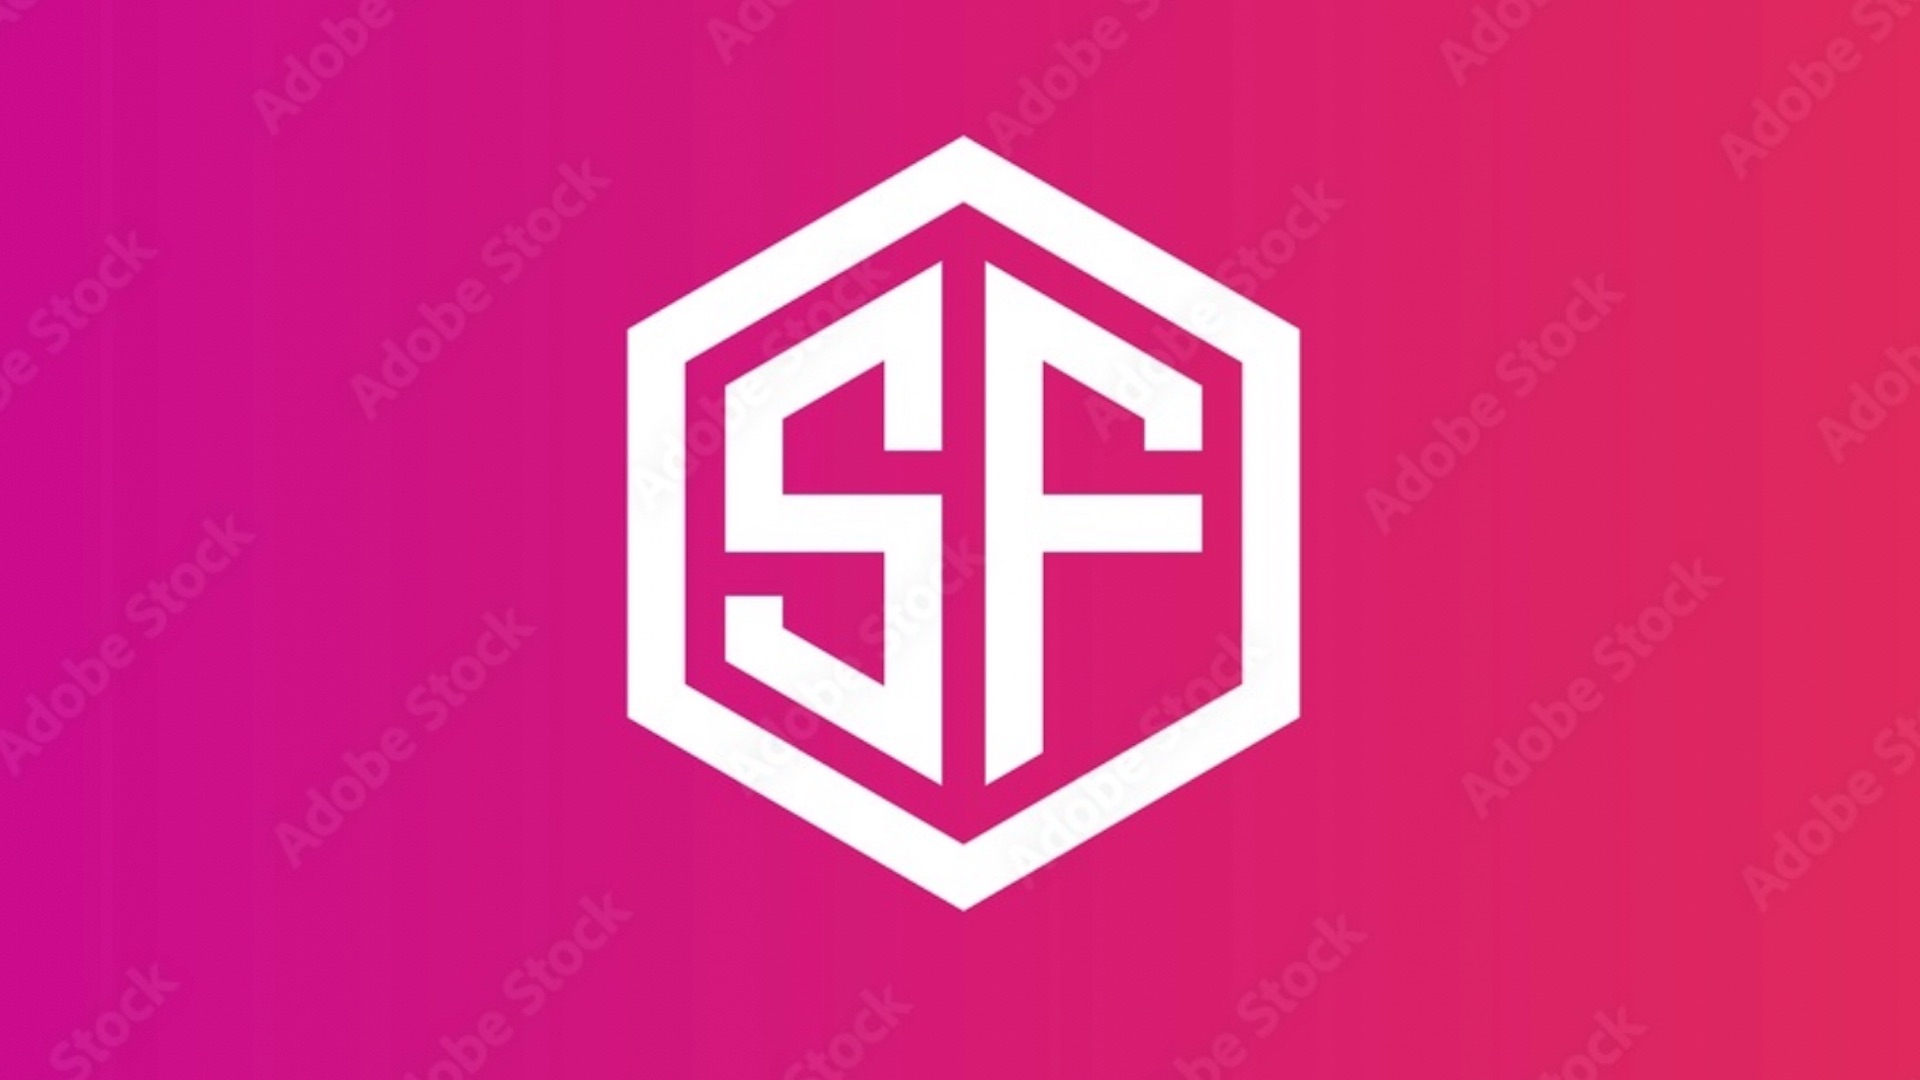 Template logo « SF » sur Adobe Stock